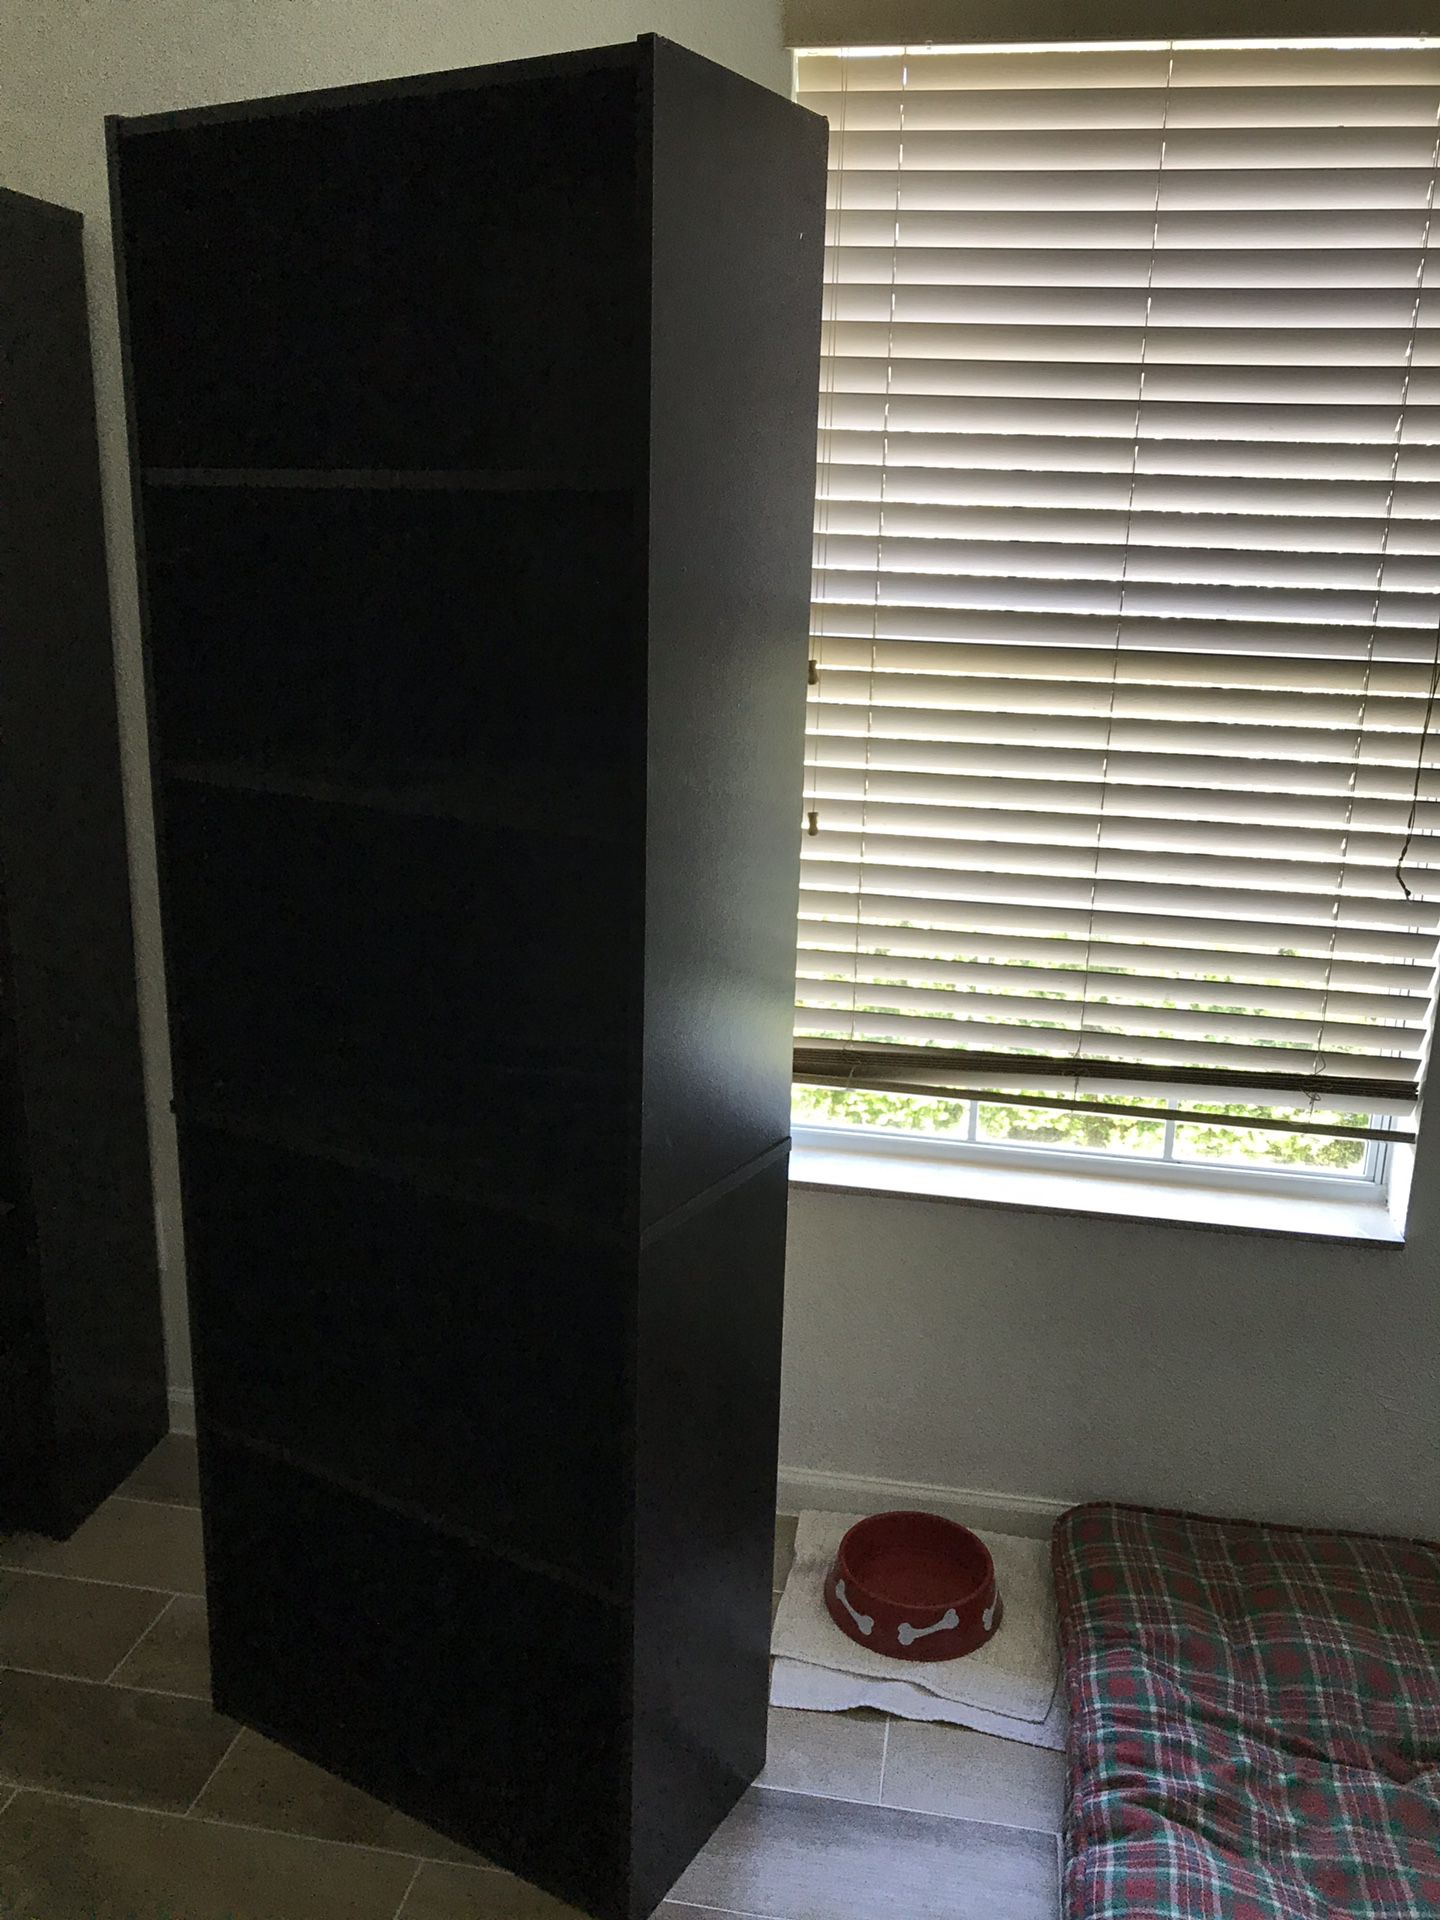 Large free standing dark bookshelves with 4 adjustable shelves